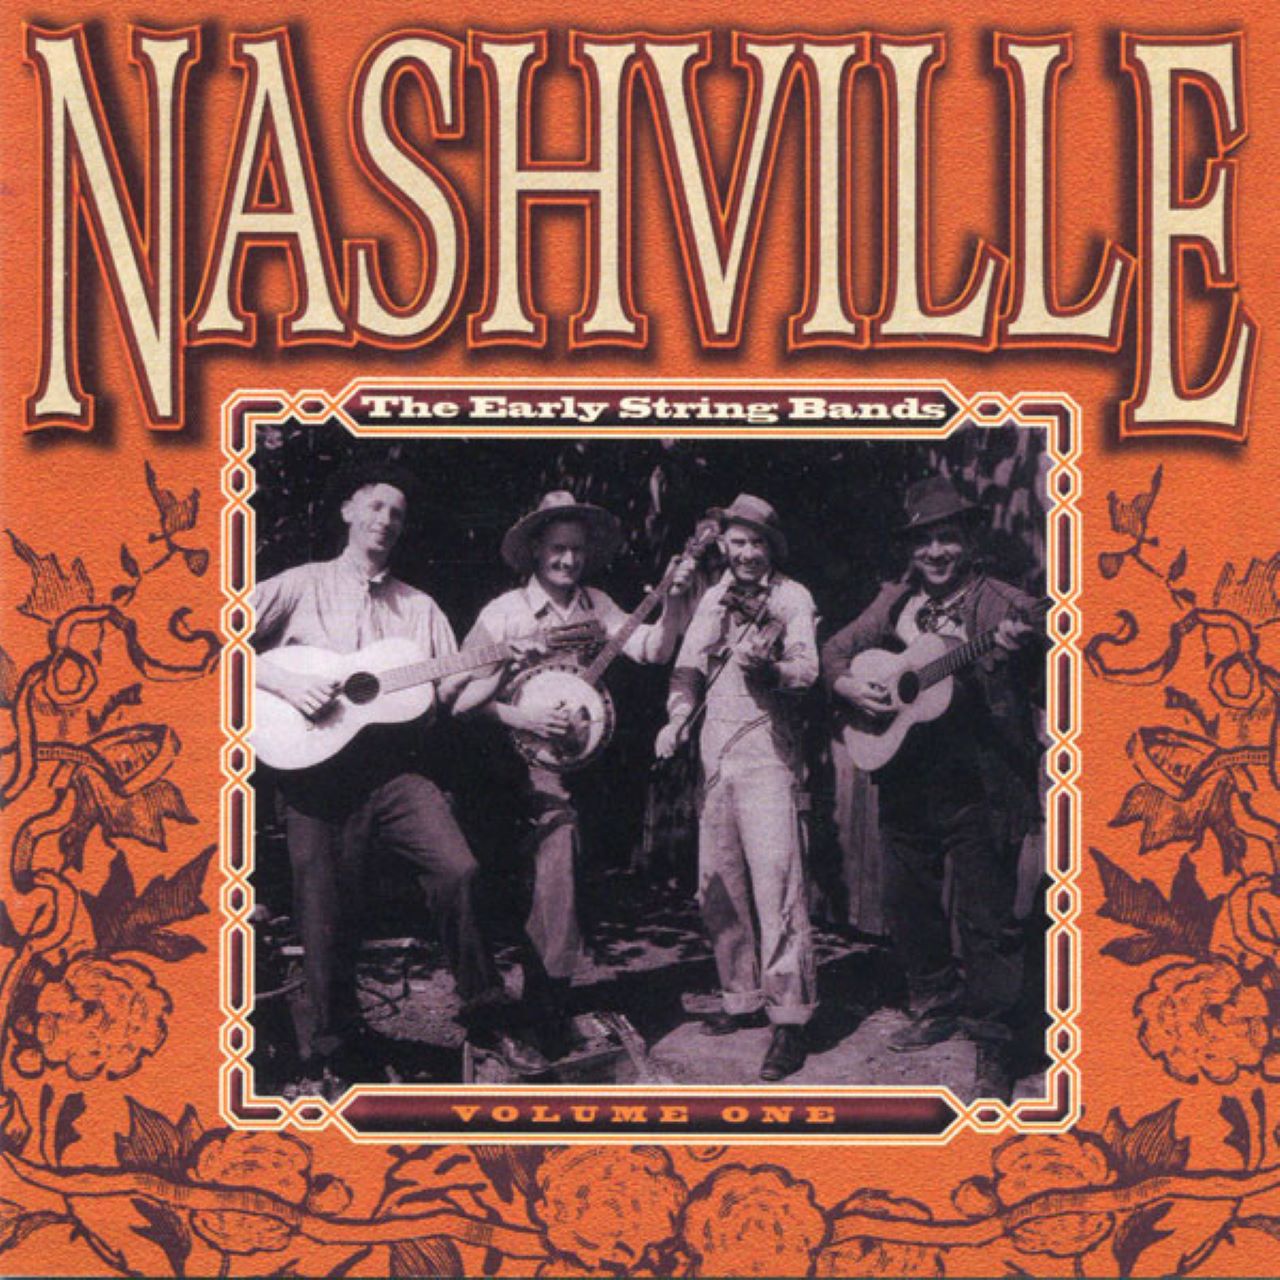 A.A.V.V. - Nashville – The Early String Band, Vol.1-Vol.2 cover album